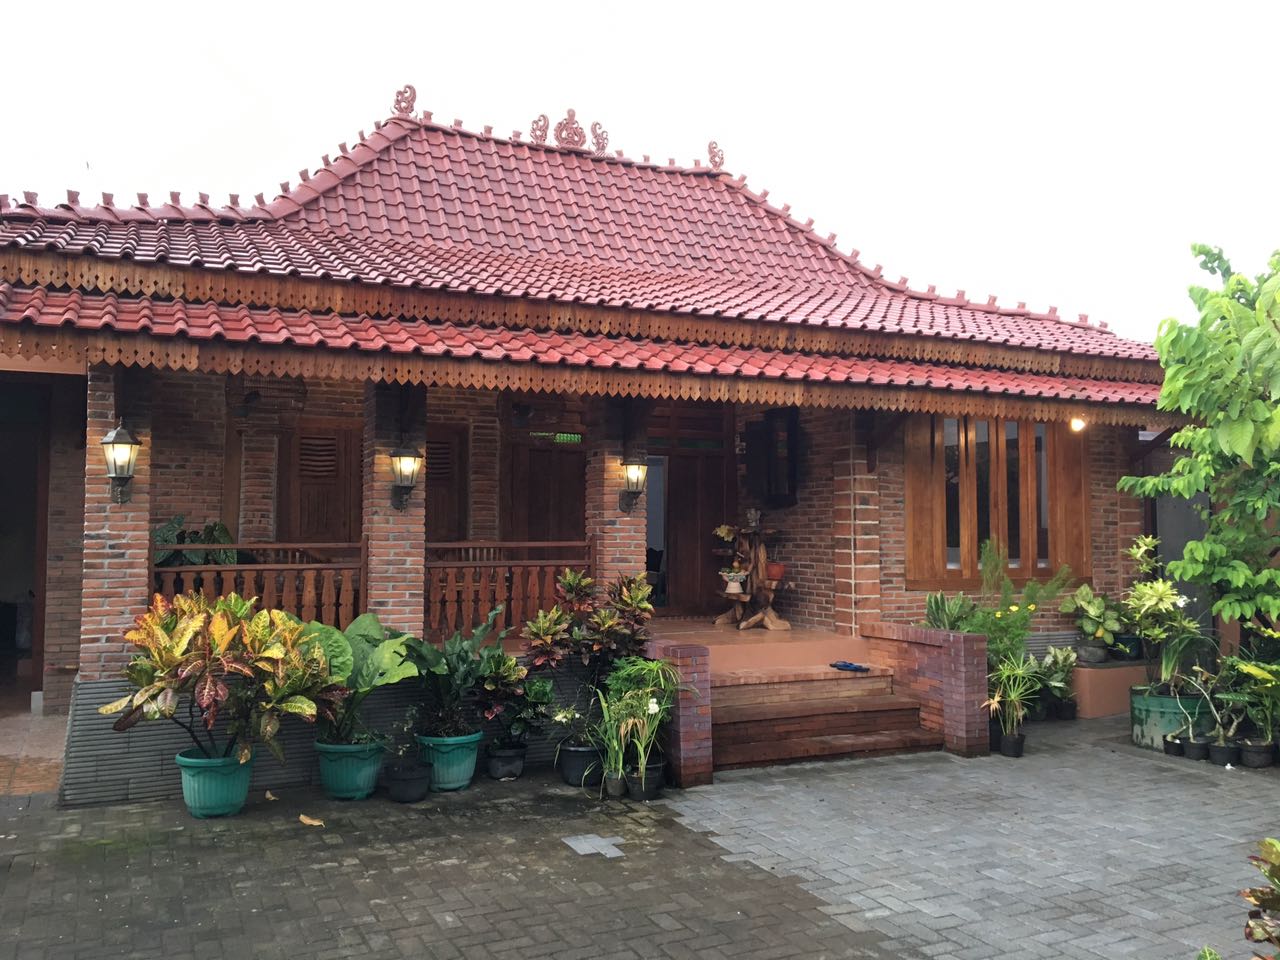 Sekilas Rumah Jawa: 7 Jenis Rumah Limasan Khas Jawa, Inspirasi Hunian